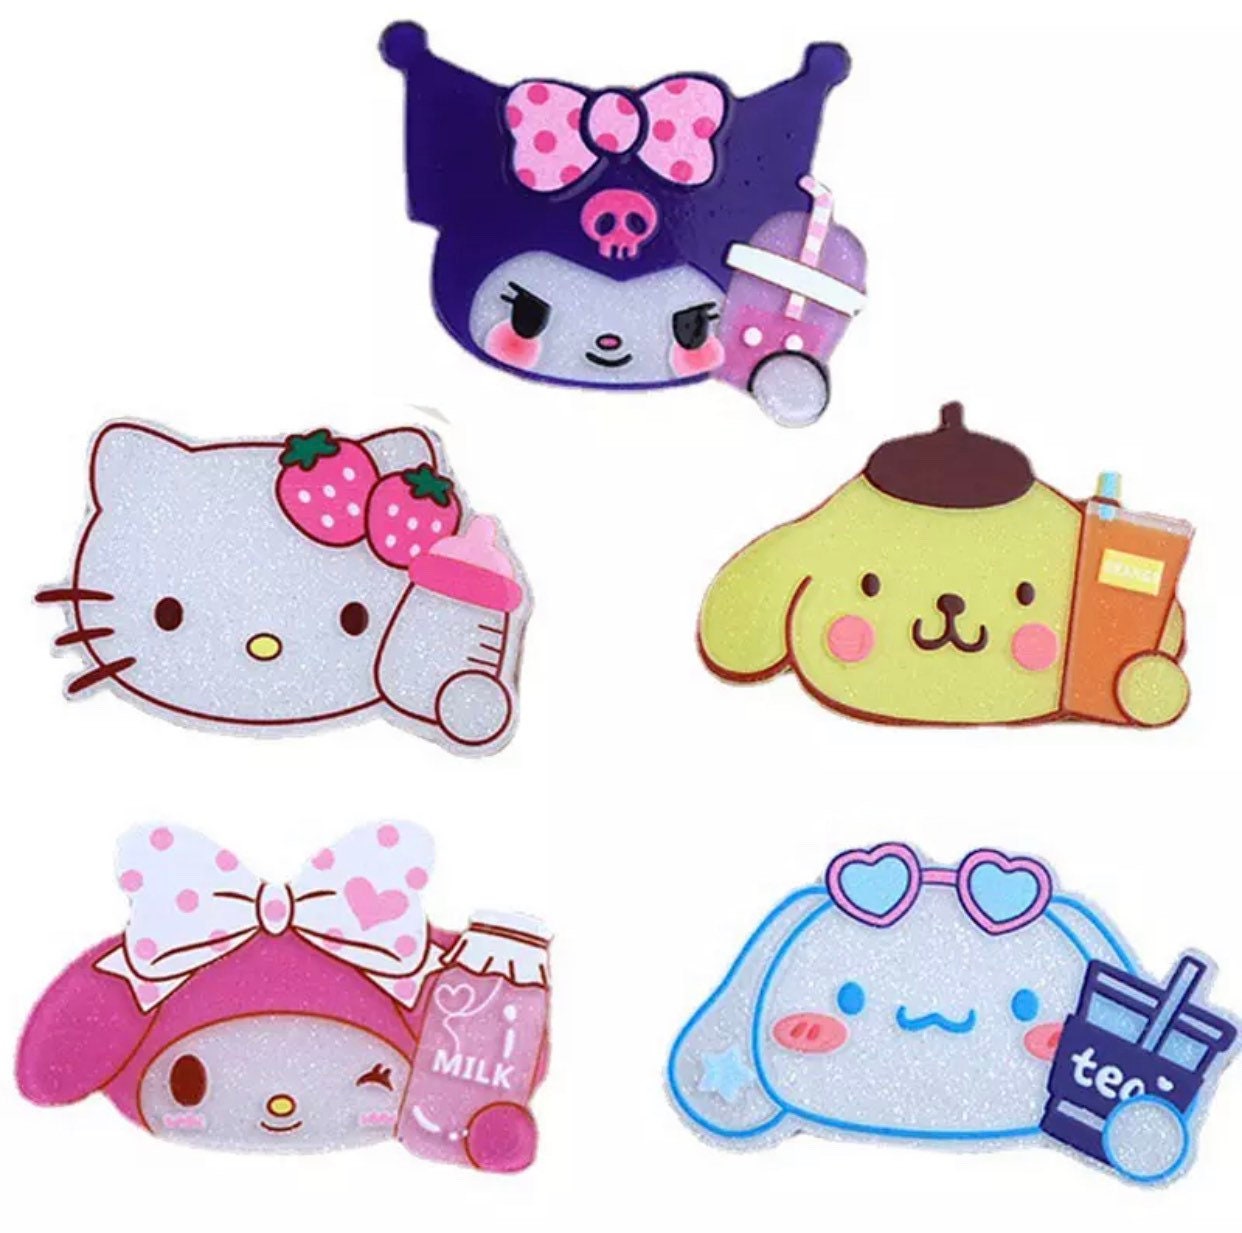 Sanriod | glitter Badge reels | rectractable reel | kawaii | carabiner | Kuro | Melody | cute gifts | RN | dental assistant | accessories |